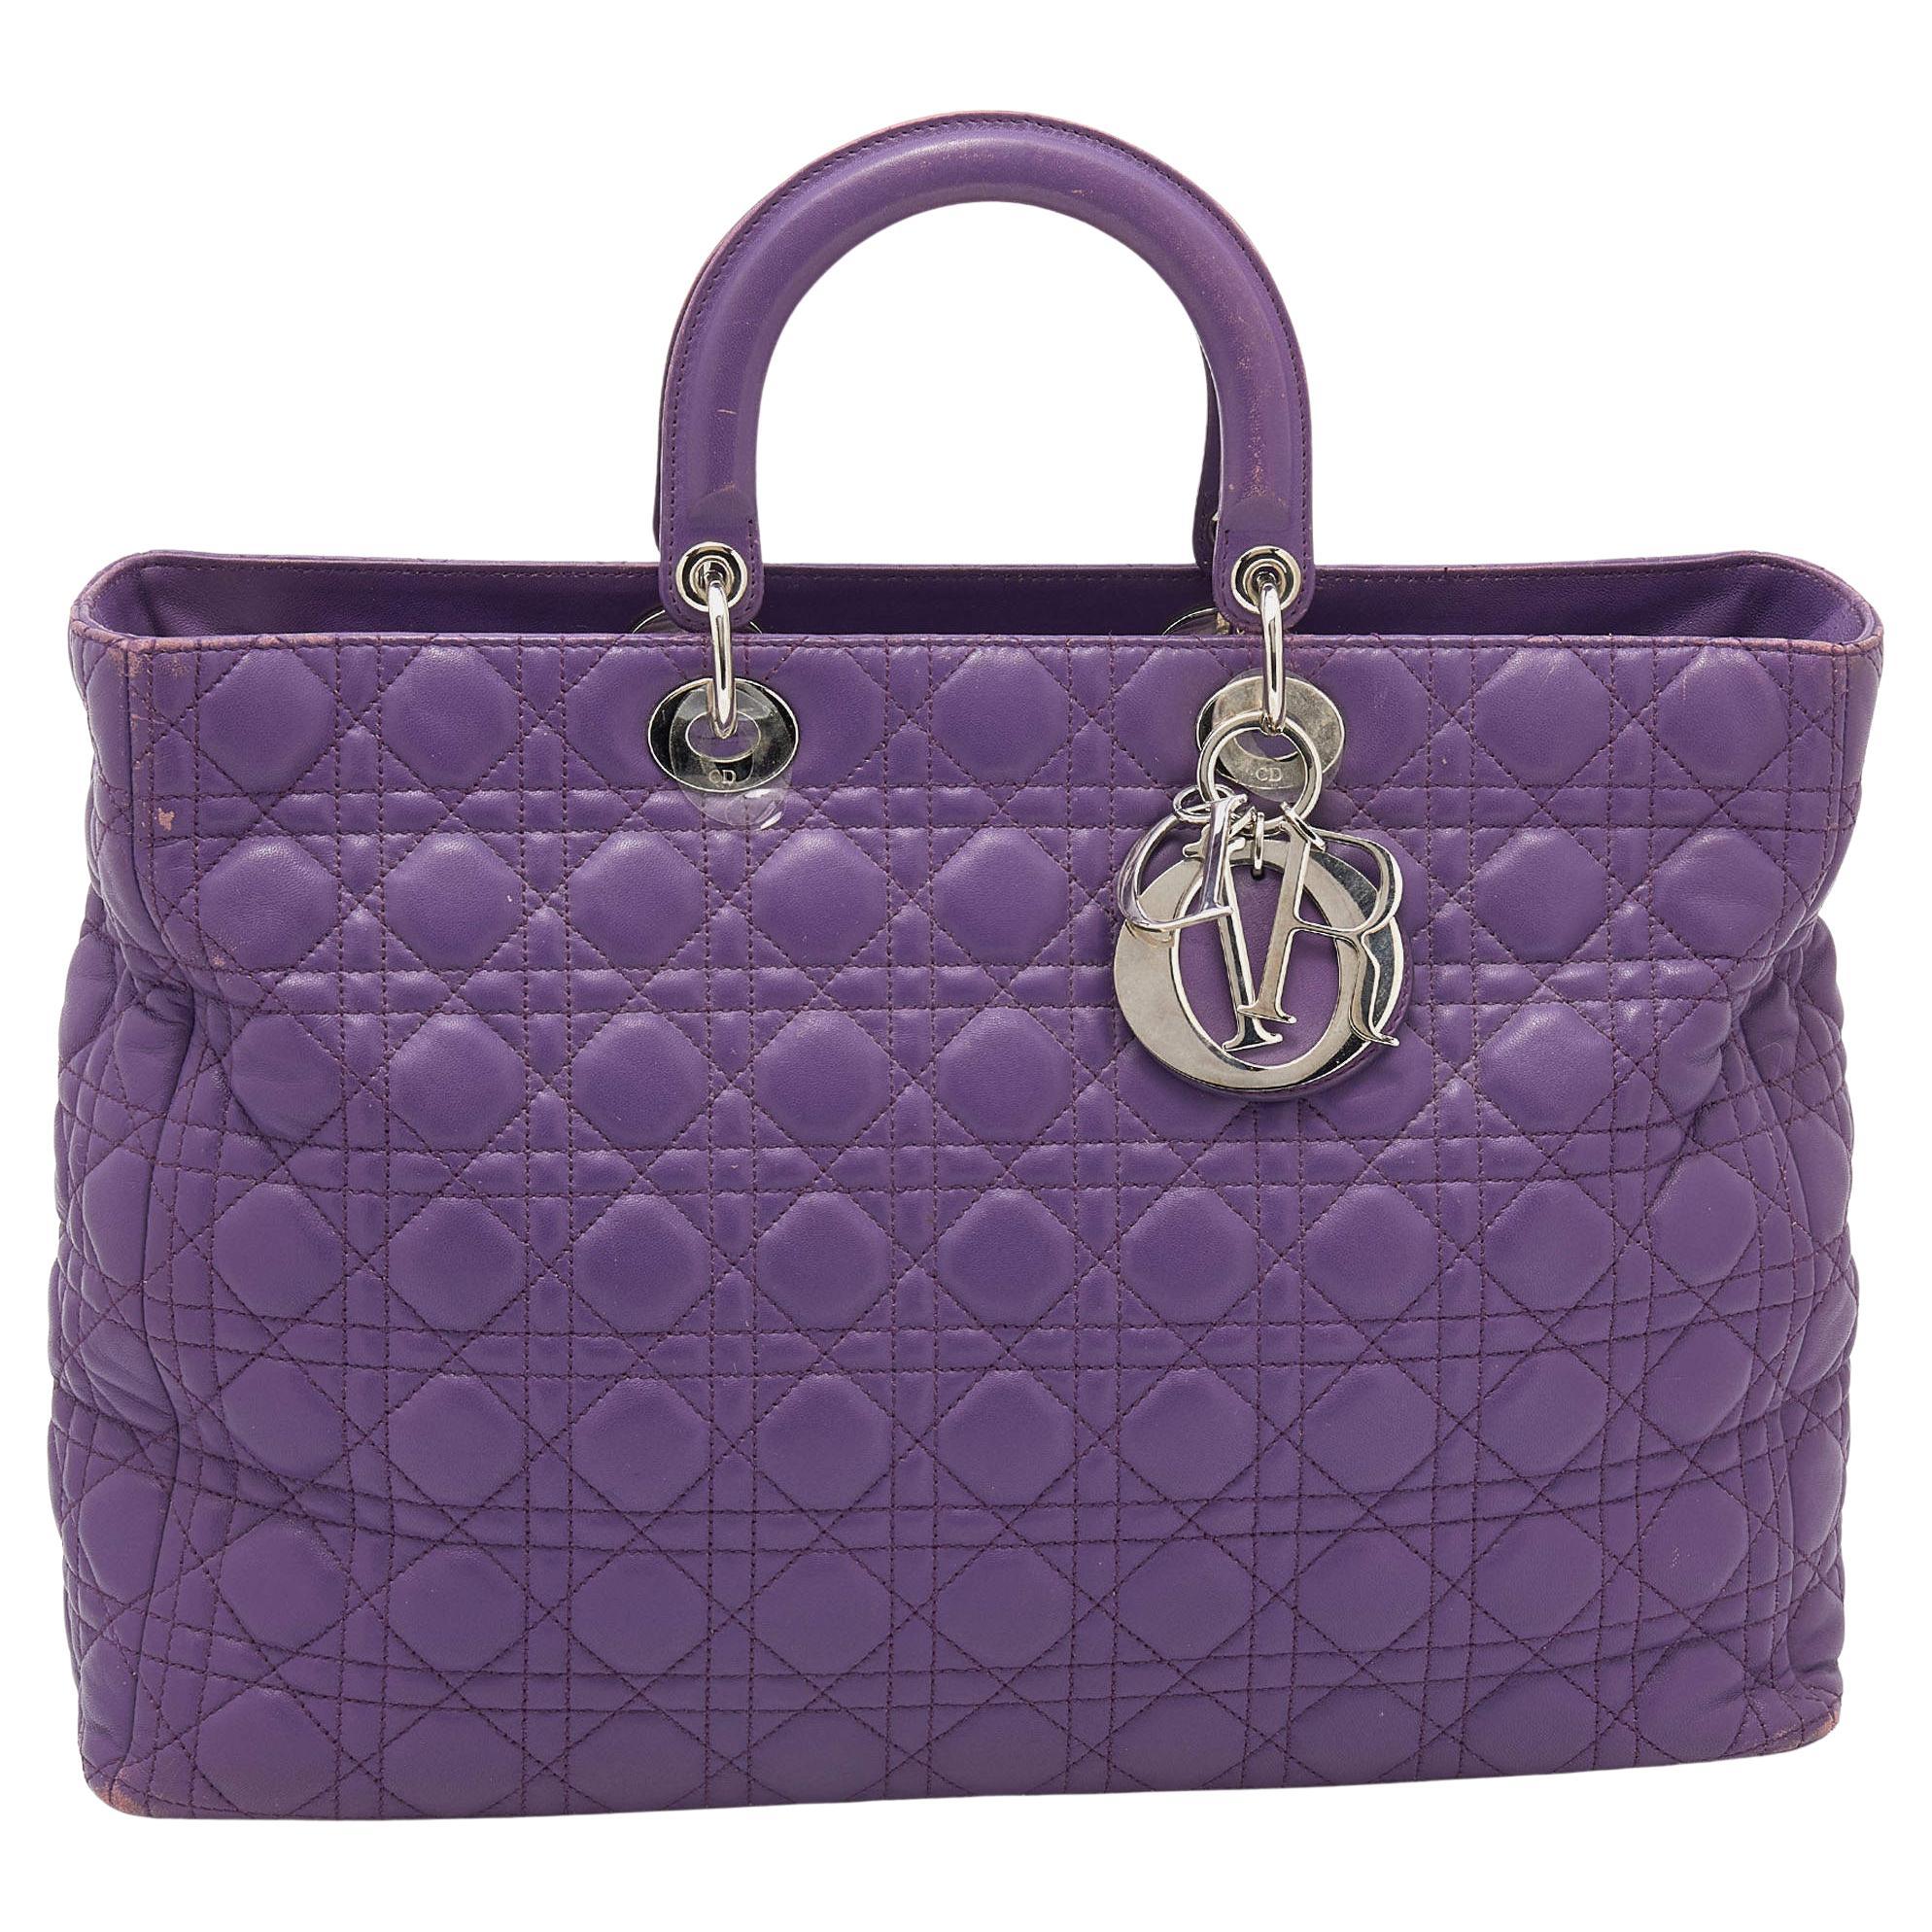 Dior - Grand sac cabas Lady Dior en cuir cannage violet